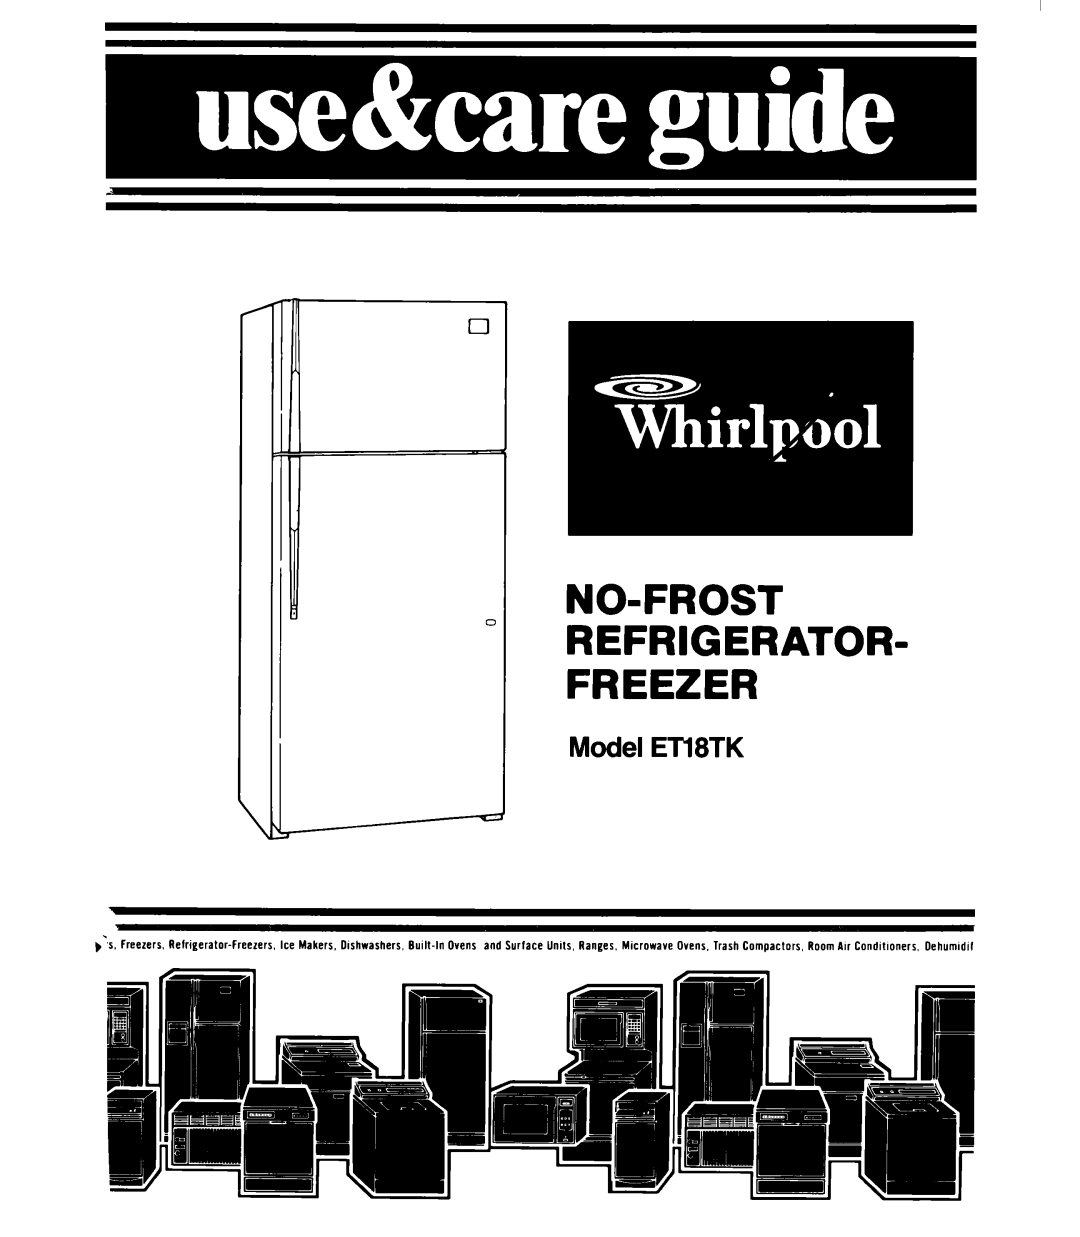 Whirlpool manual Model ETl8TK, No-Frost, Refrigerator Freezer 